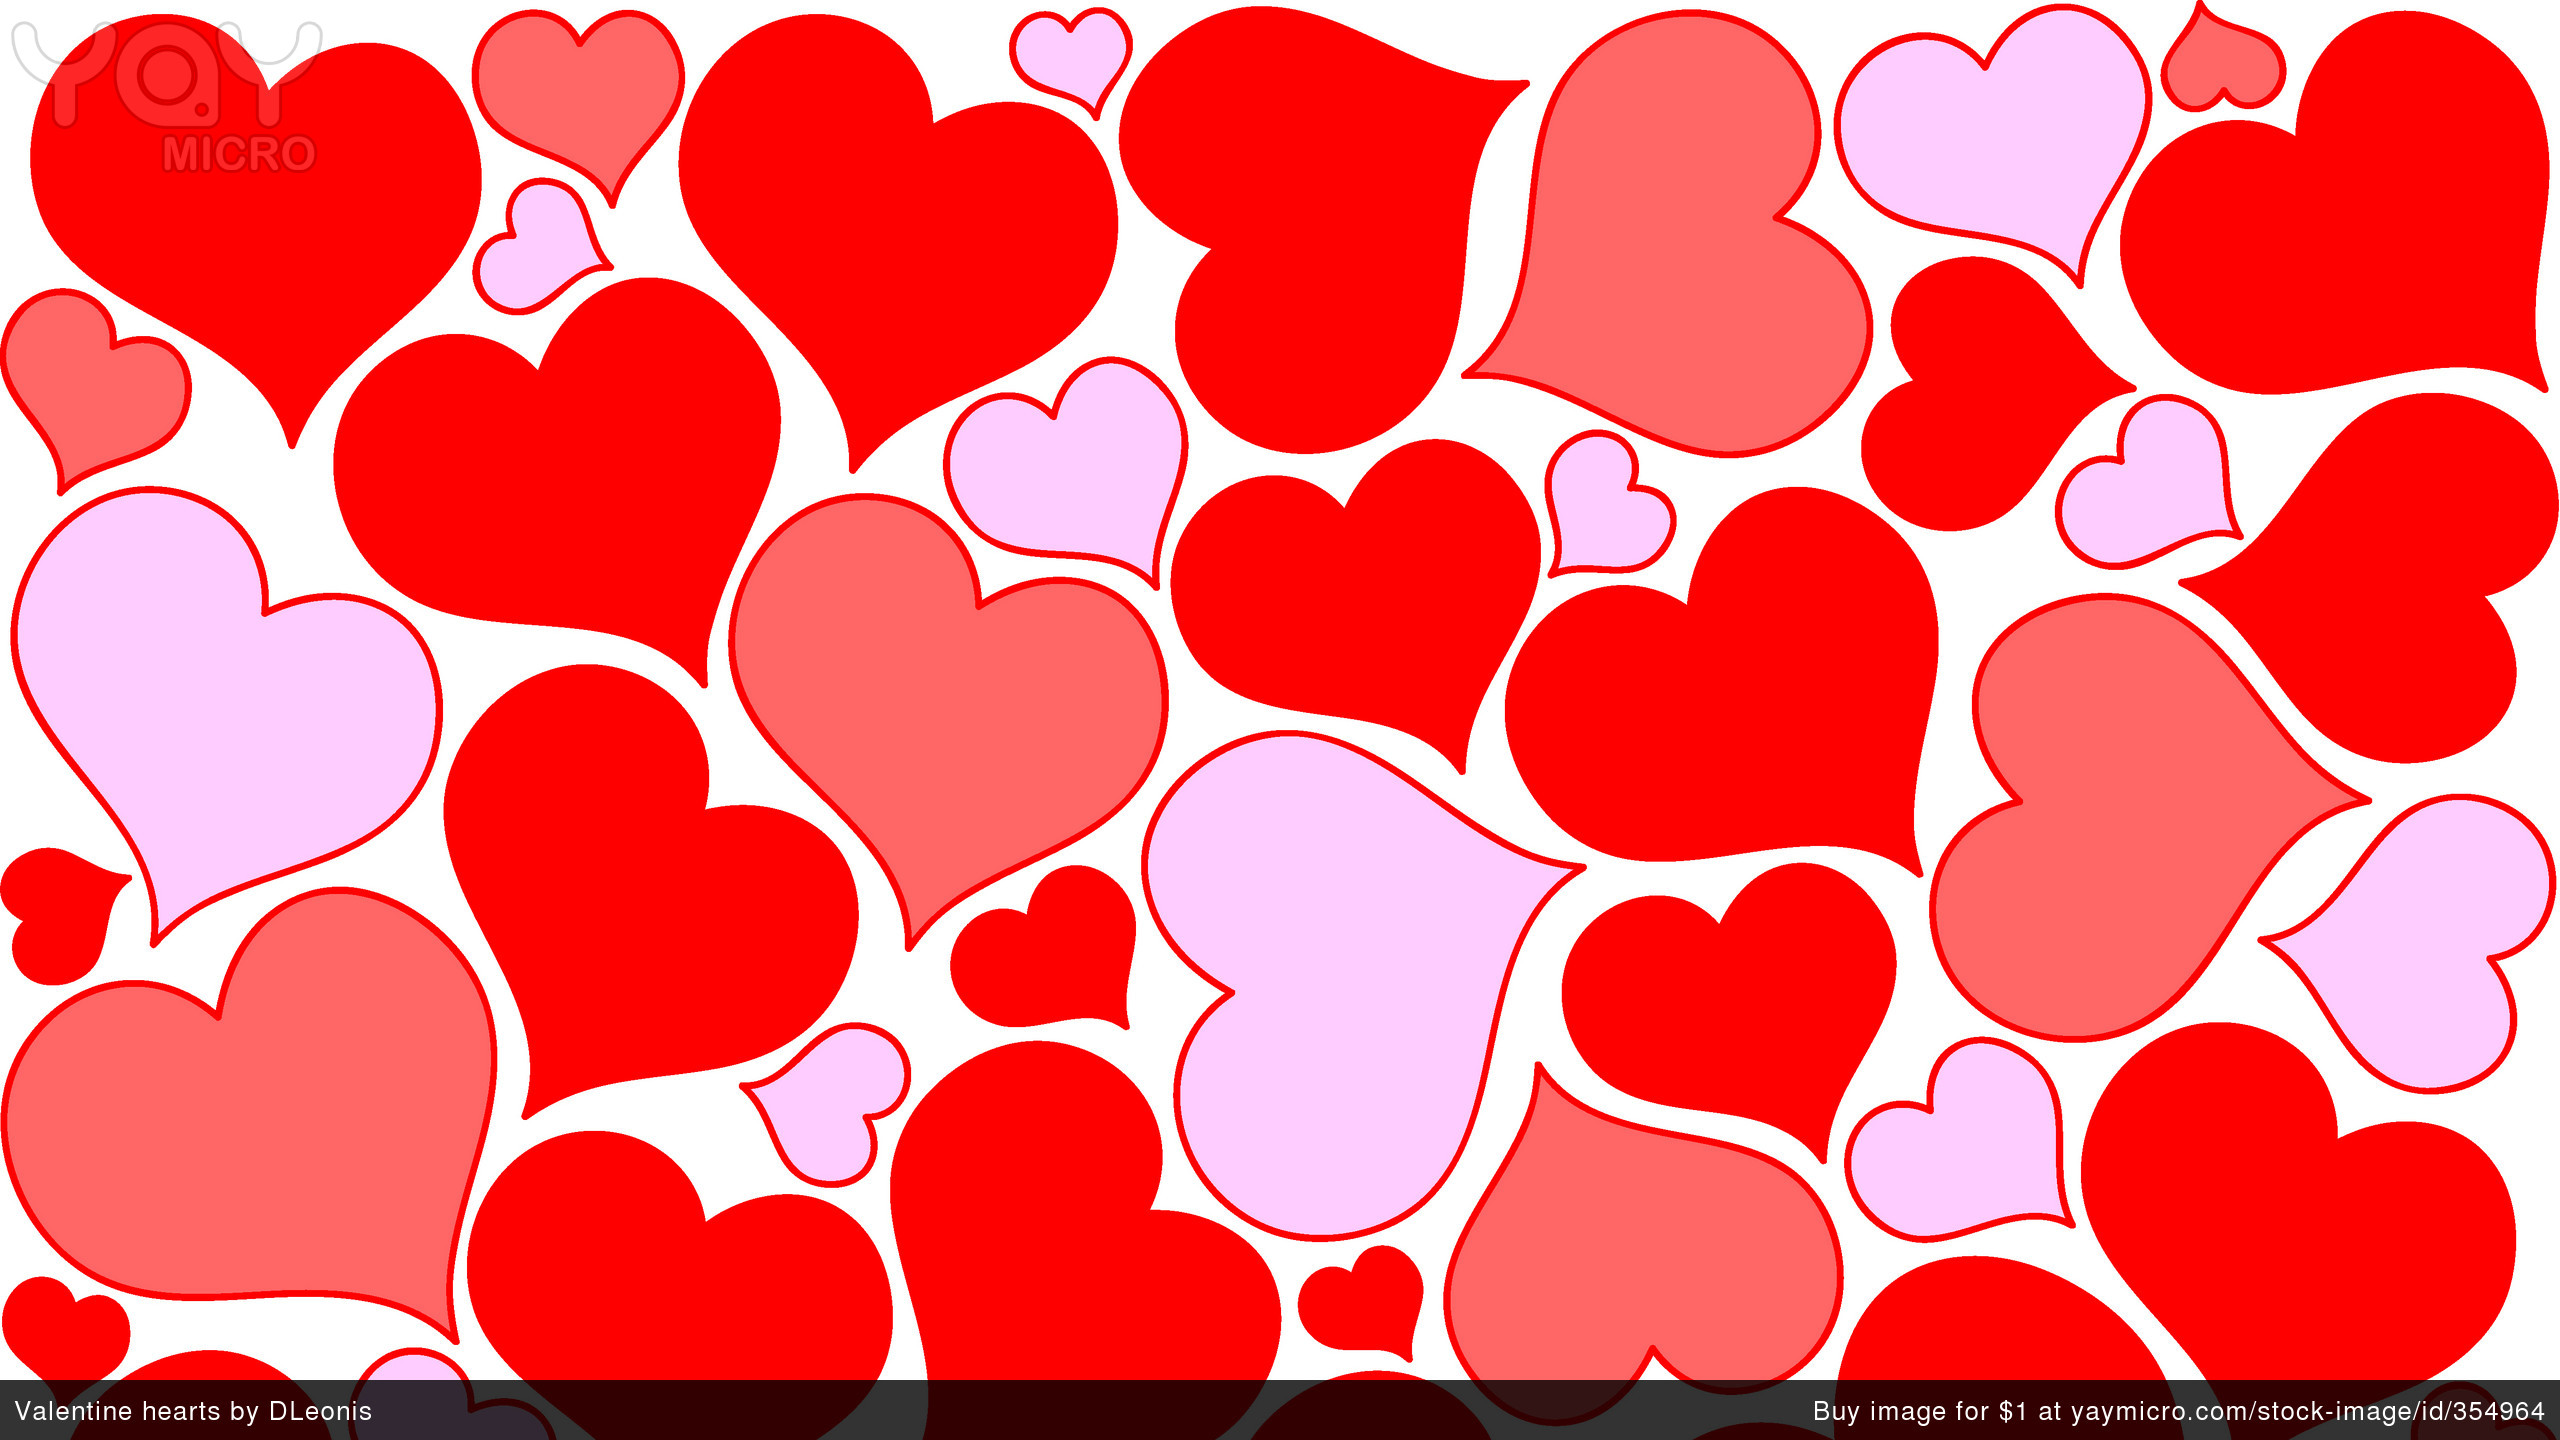 [49+] Valentine Heart Desktop Wallpaper on WallpaperSafari